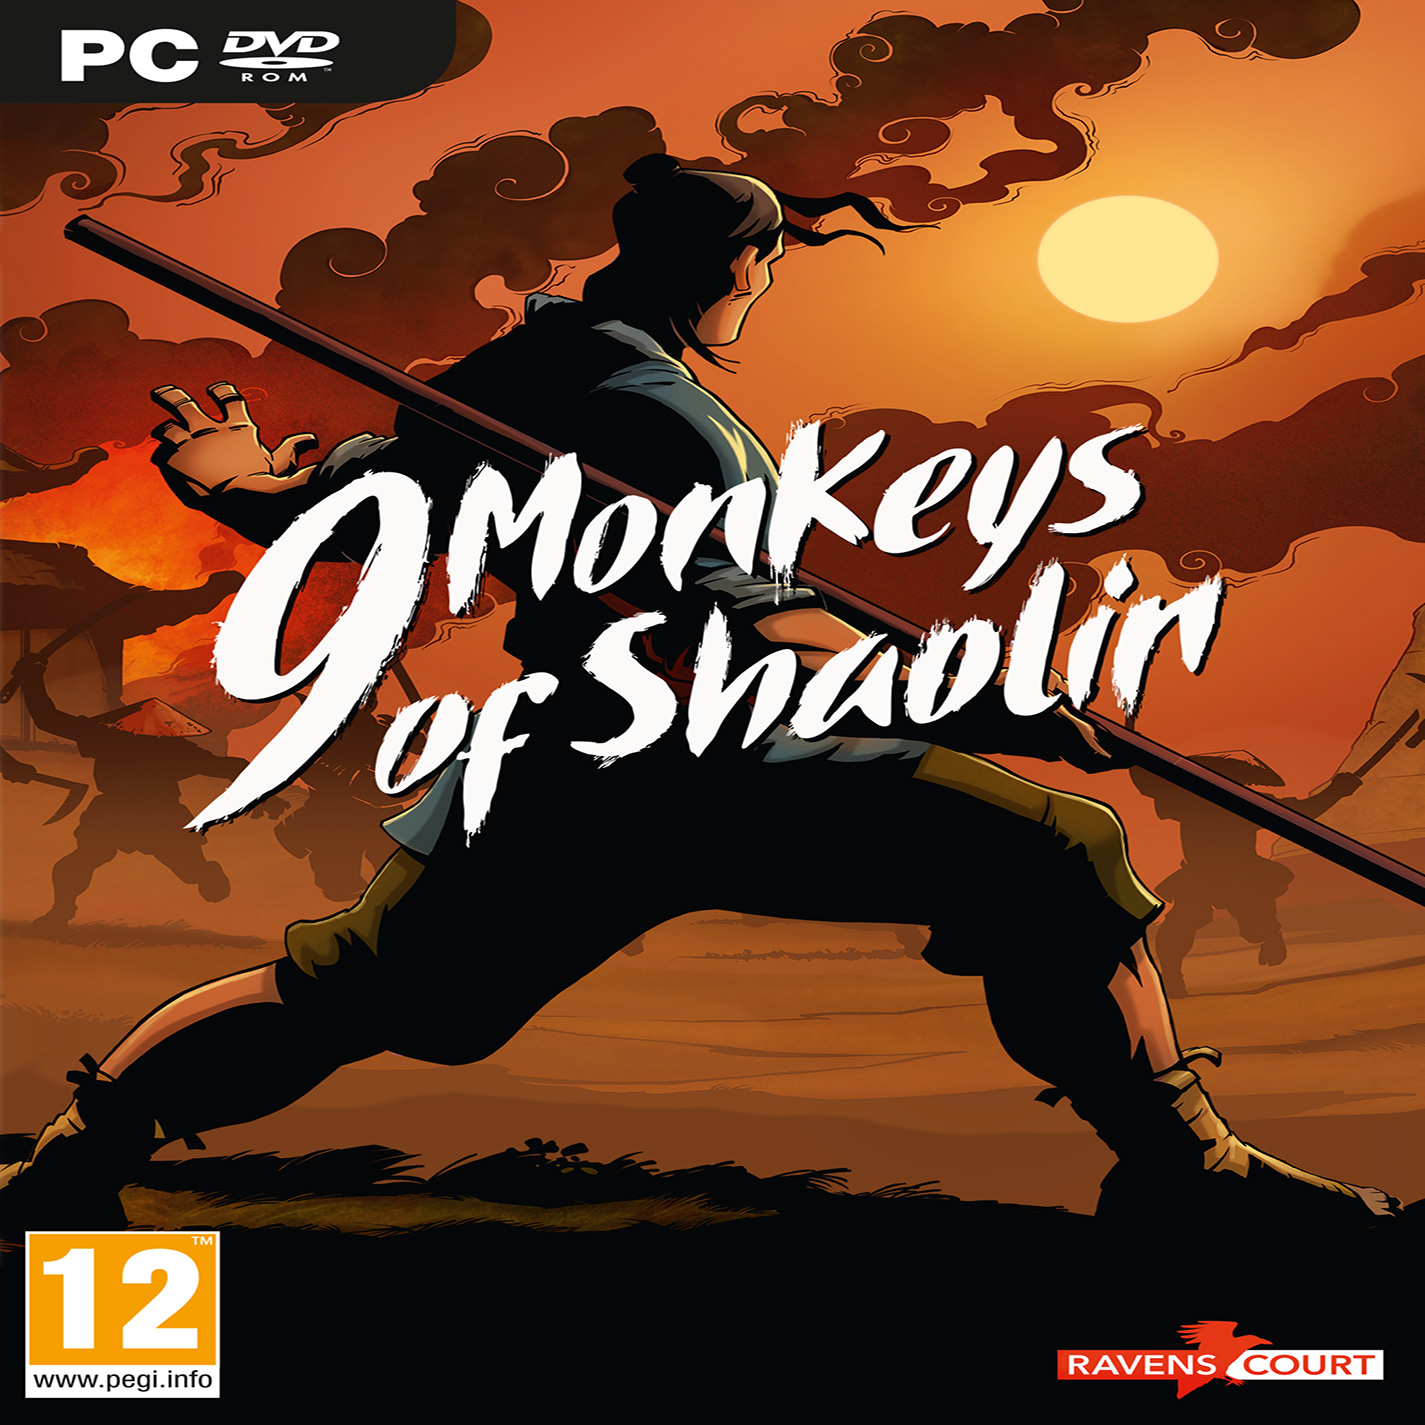 9 Monkeys of Shaolin - pedn CD obal